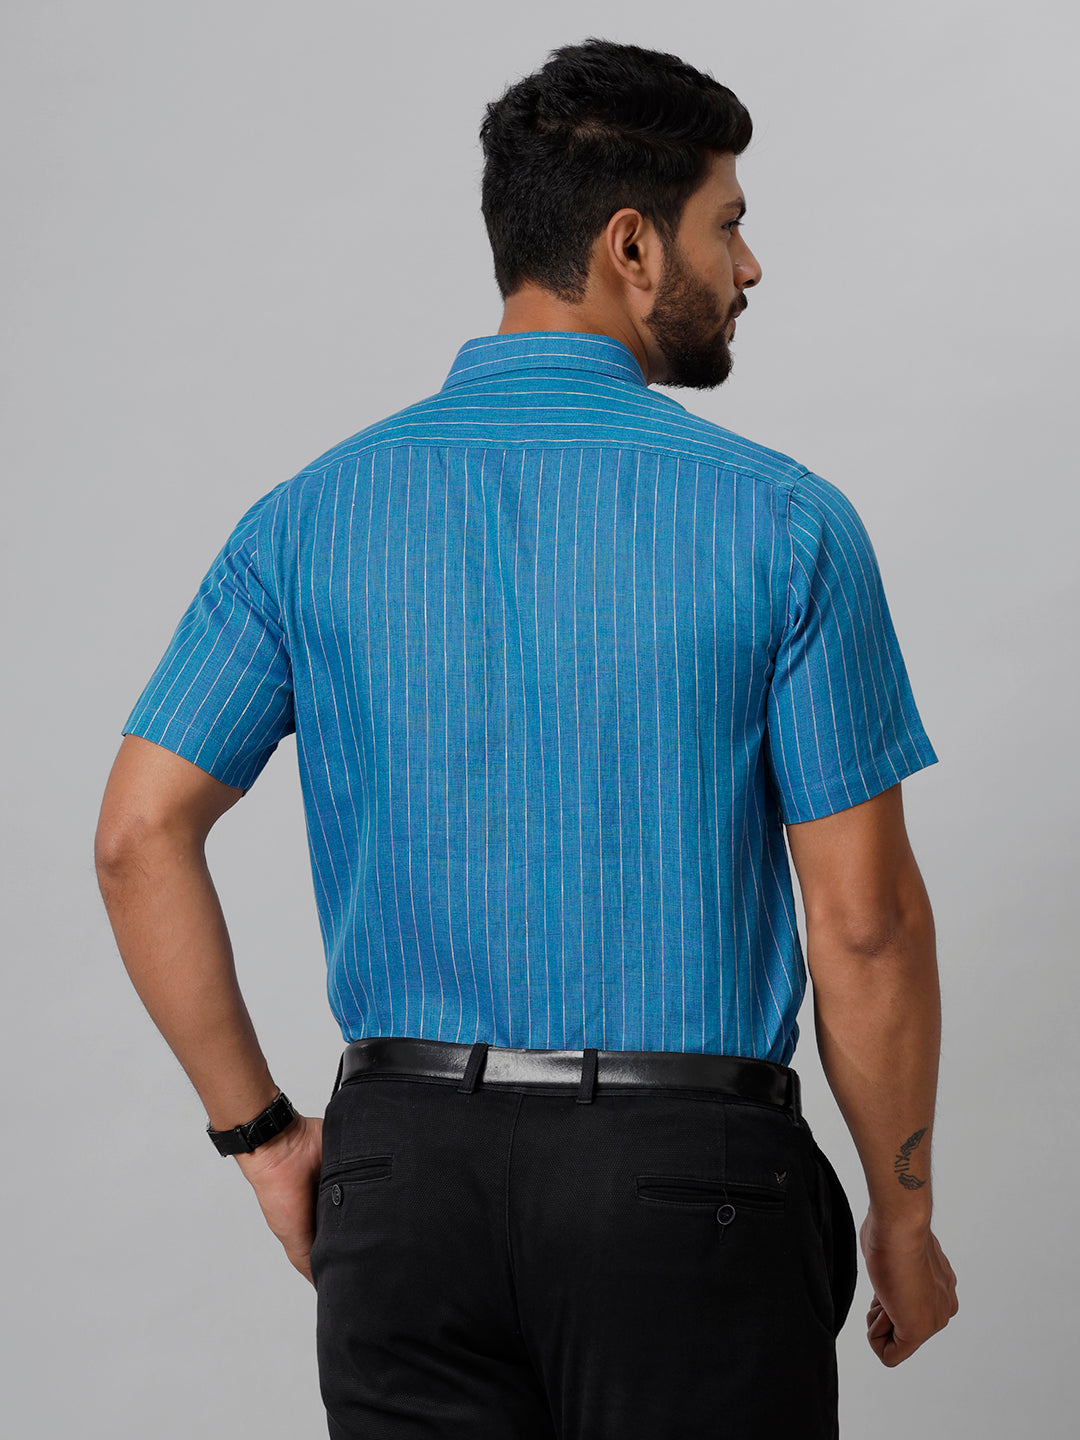 Mens Pure Linen Striped Half Sleeves Blue Shirt LS11-Back view